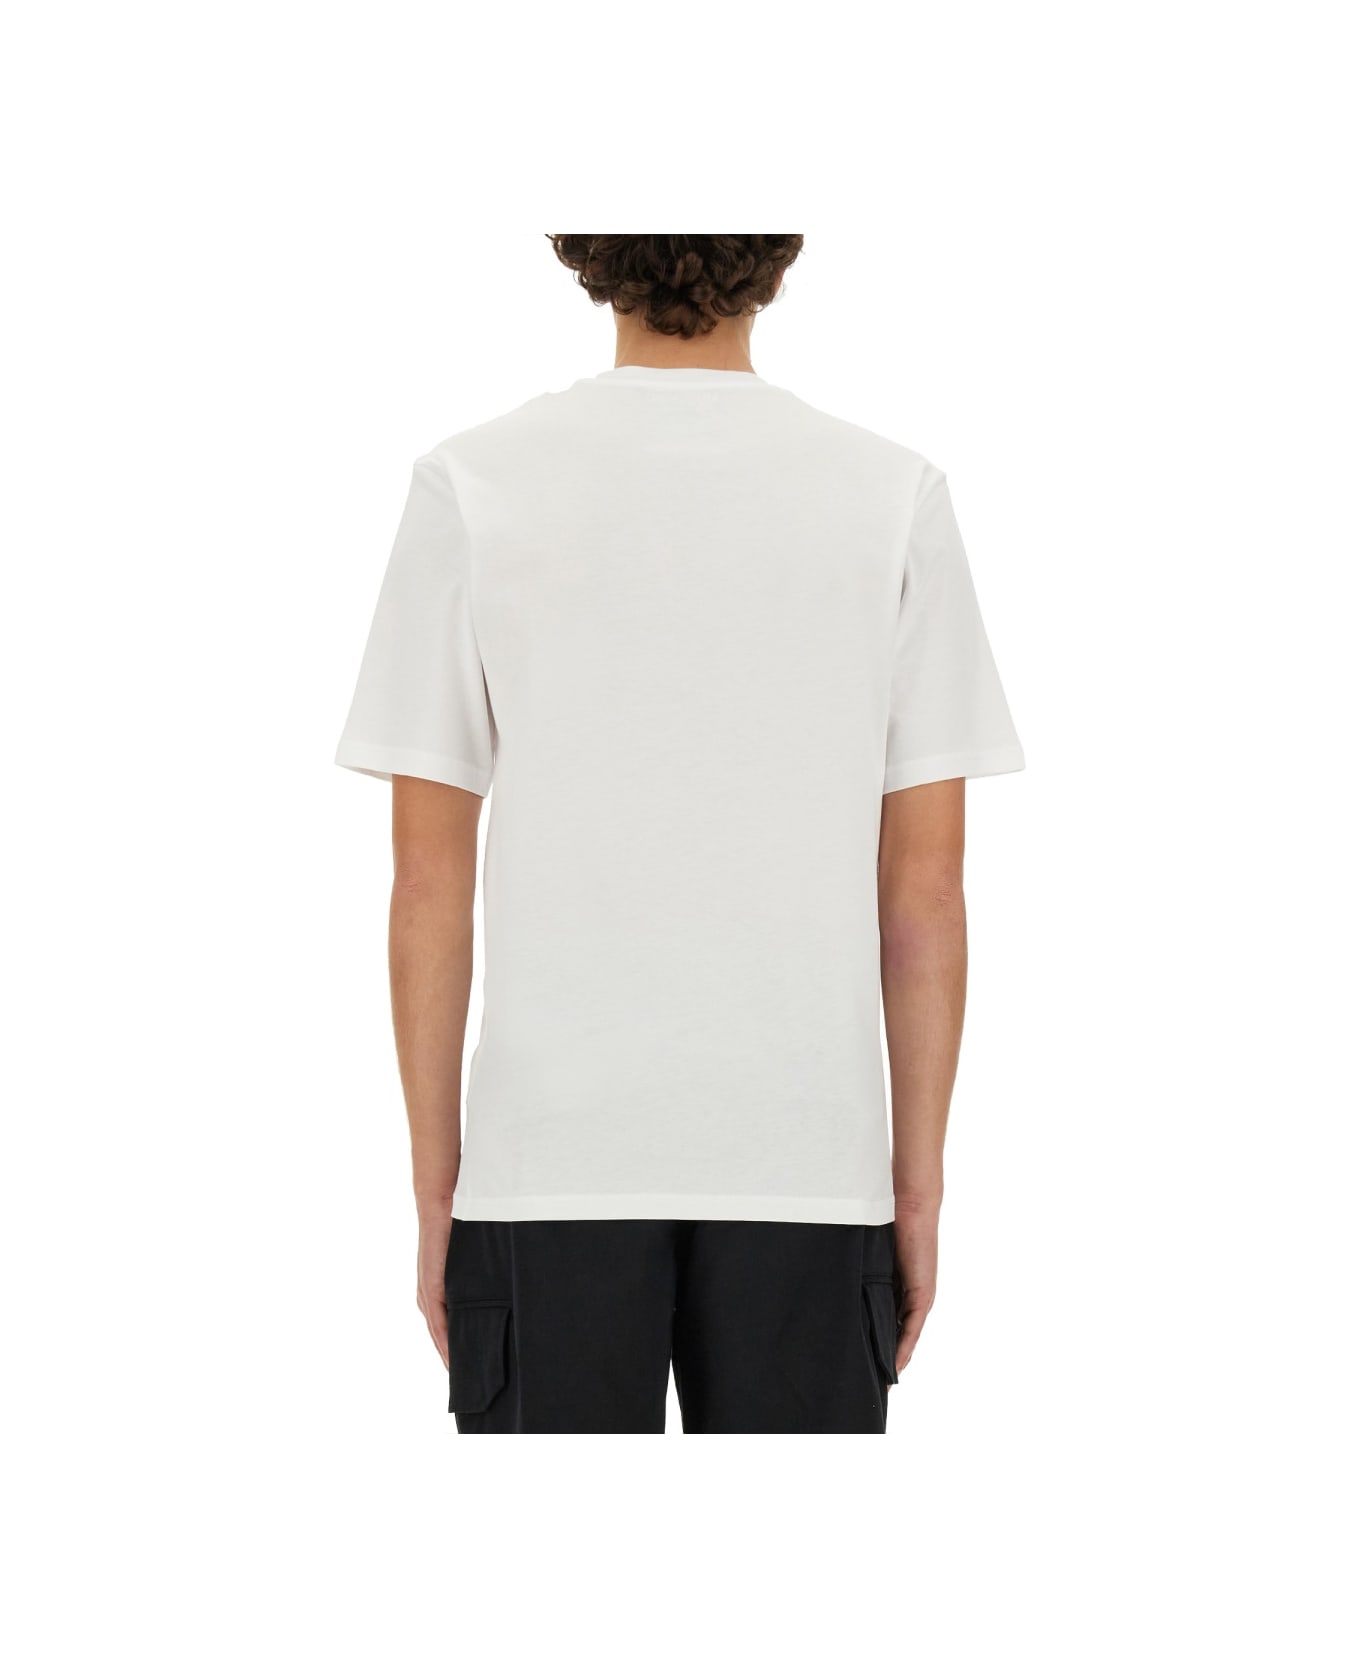 Moschino Multicolor Logo T-shirt - WHITE シャツ